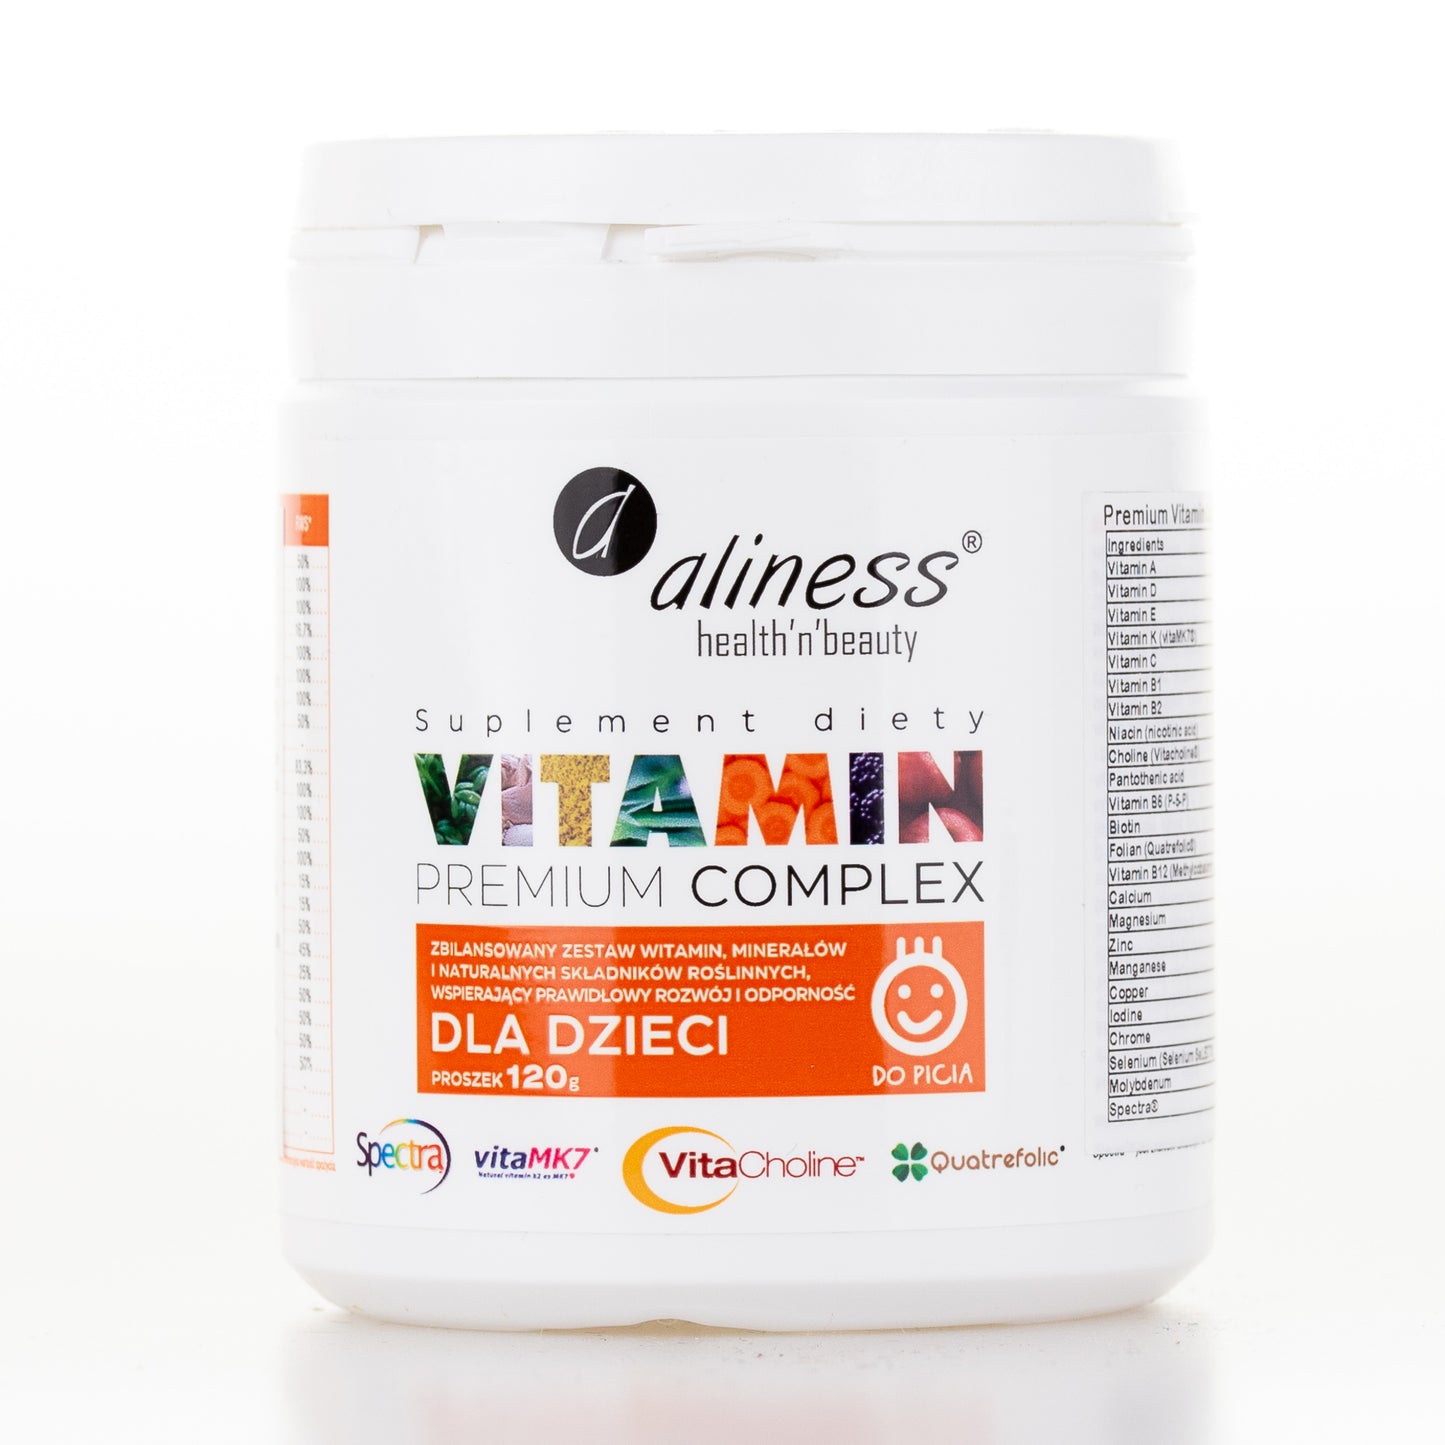 Premium Vitamin Complex for children, powder 120g